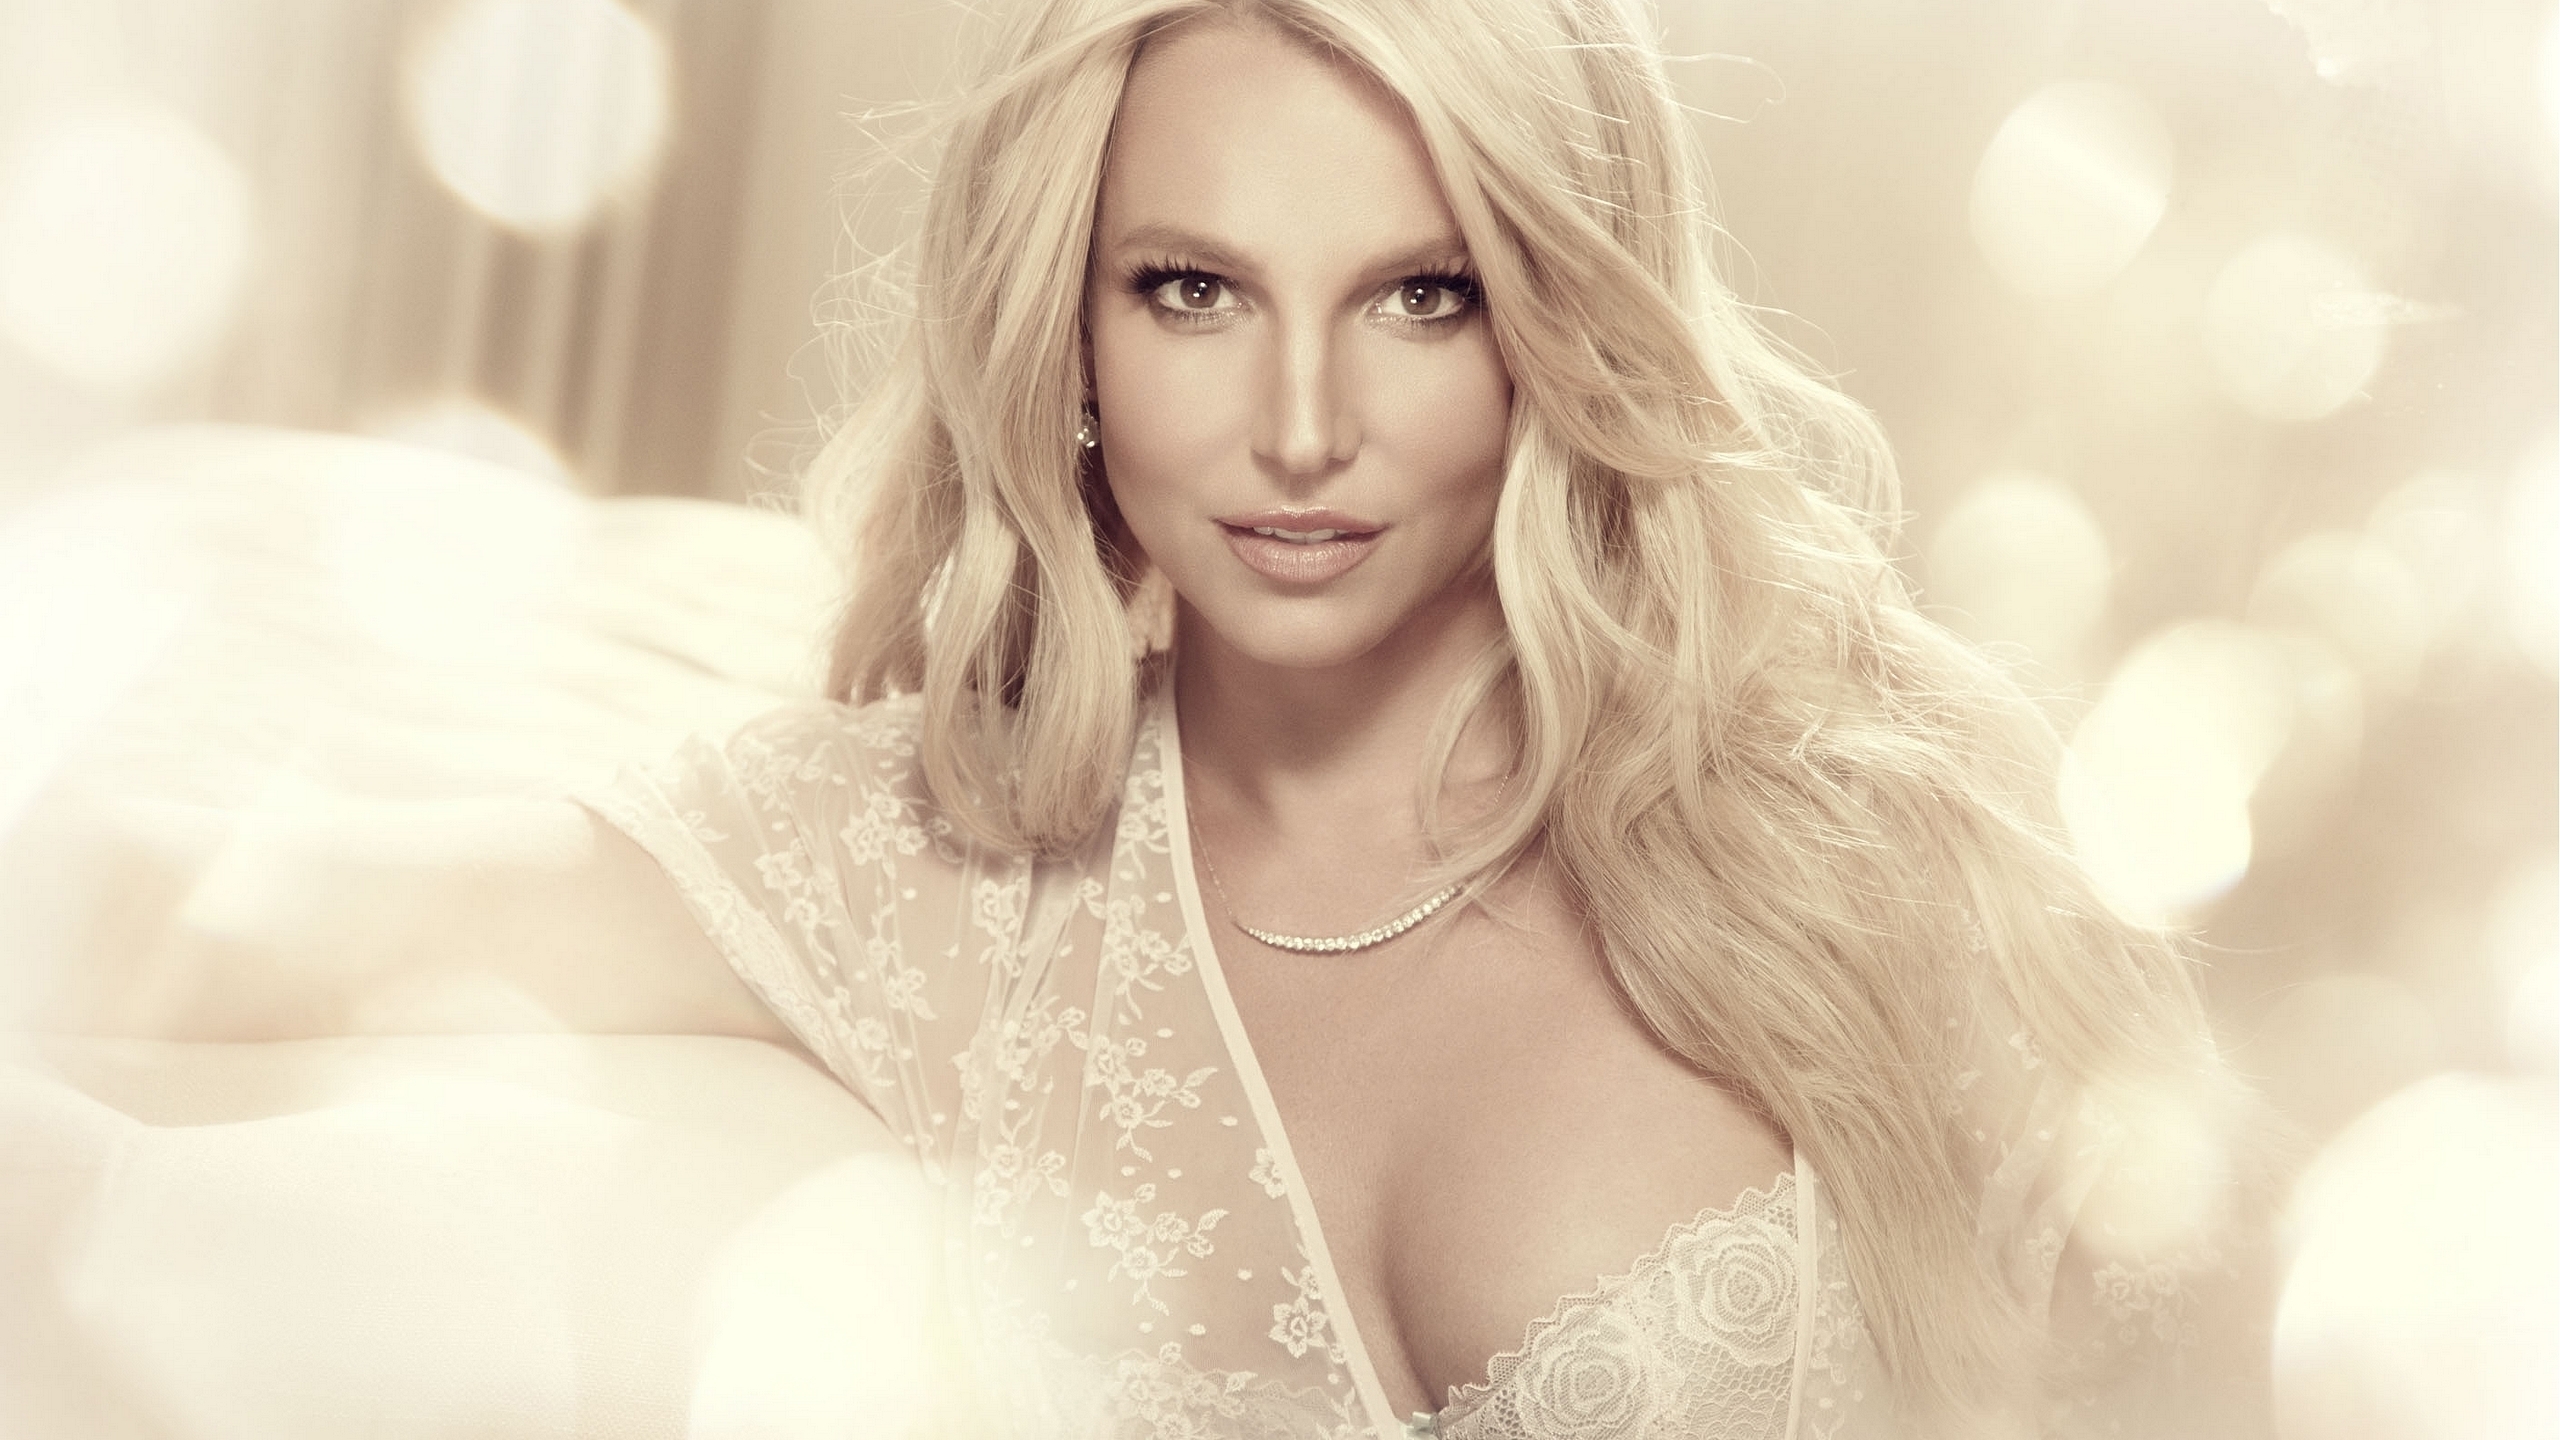 Britney Spears Glamouros for 2560x1440 HDTV resolution